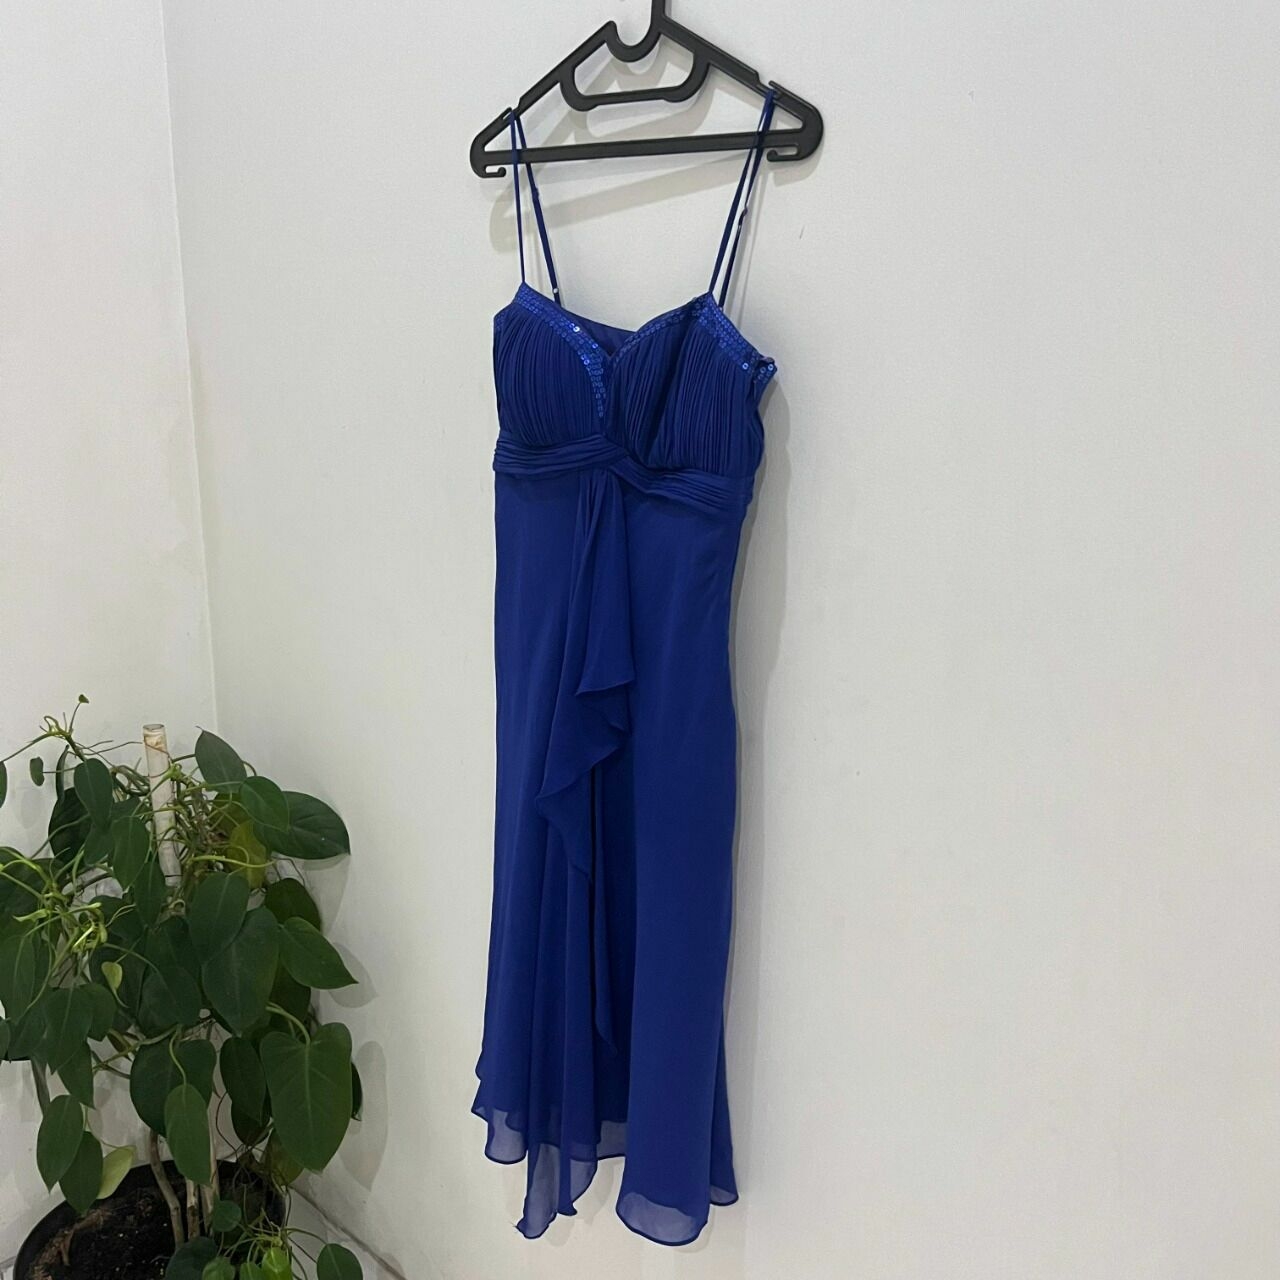 Debut Debenhams Electric Blue Party Dress